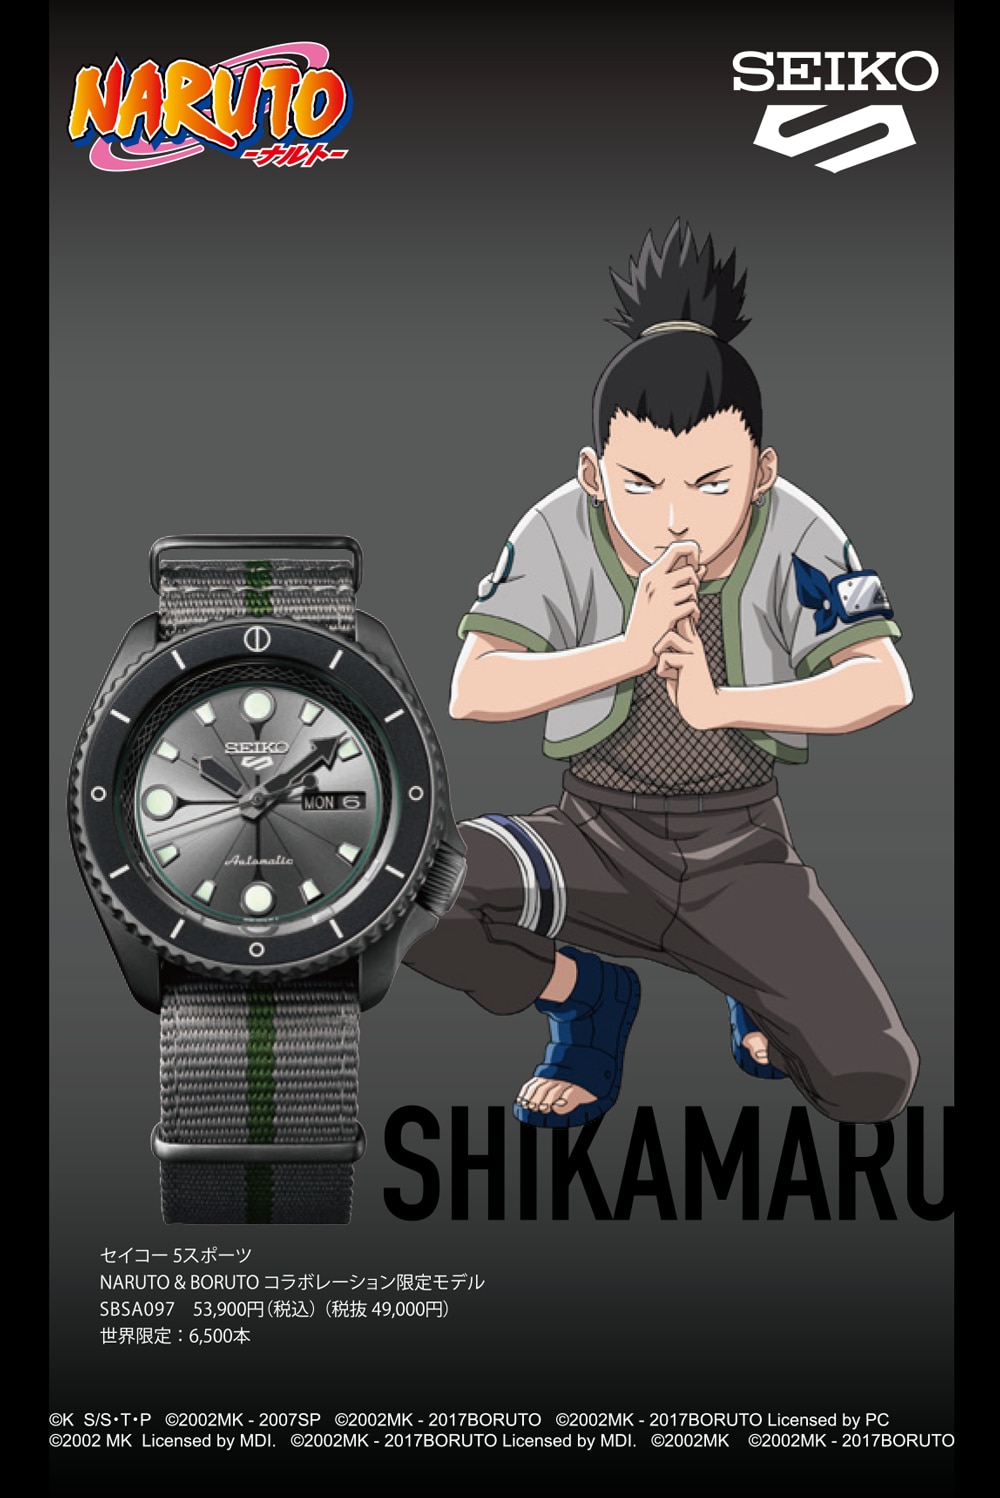 Sbsa097 シカマル Naruto ナルト Boruto ボルト セイコー5スポーツ コラボレーション限定モデル 時計専門店ザ クロックハウス